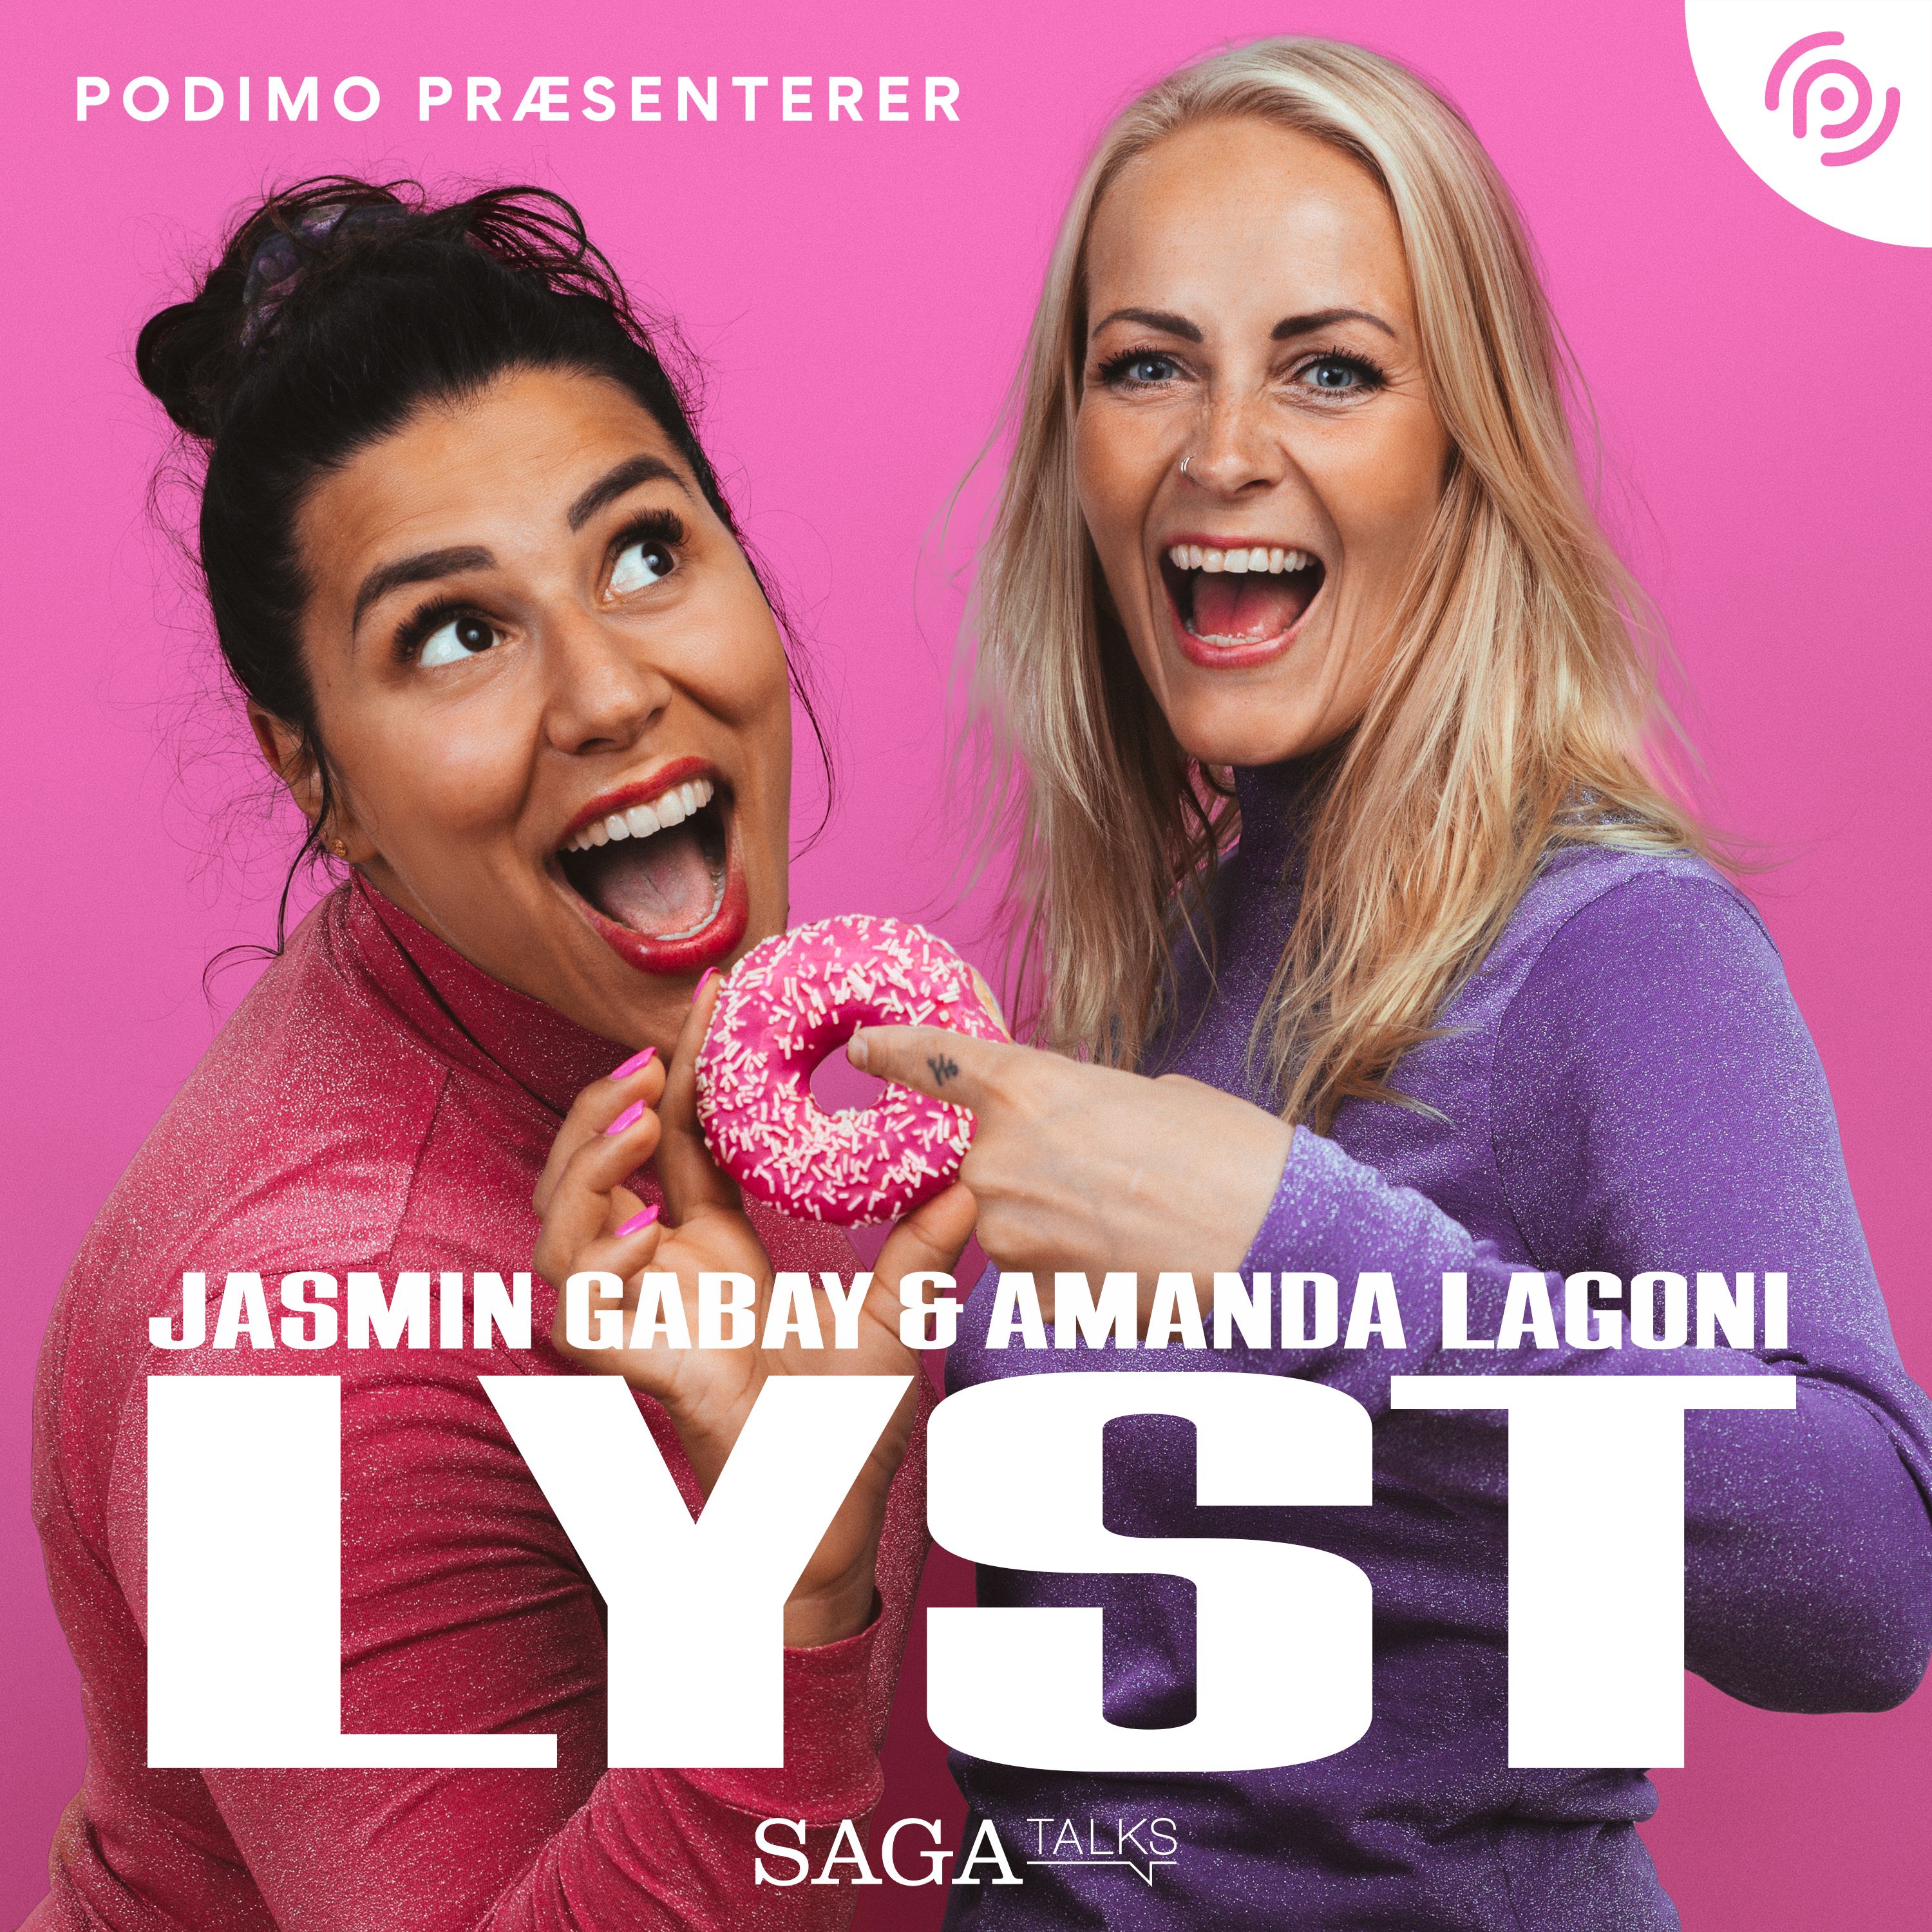 LYST - Gravid og lyst, lydbog af Jasmin Gabay, Amanda Lagoni